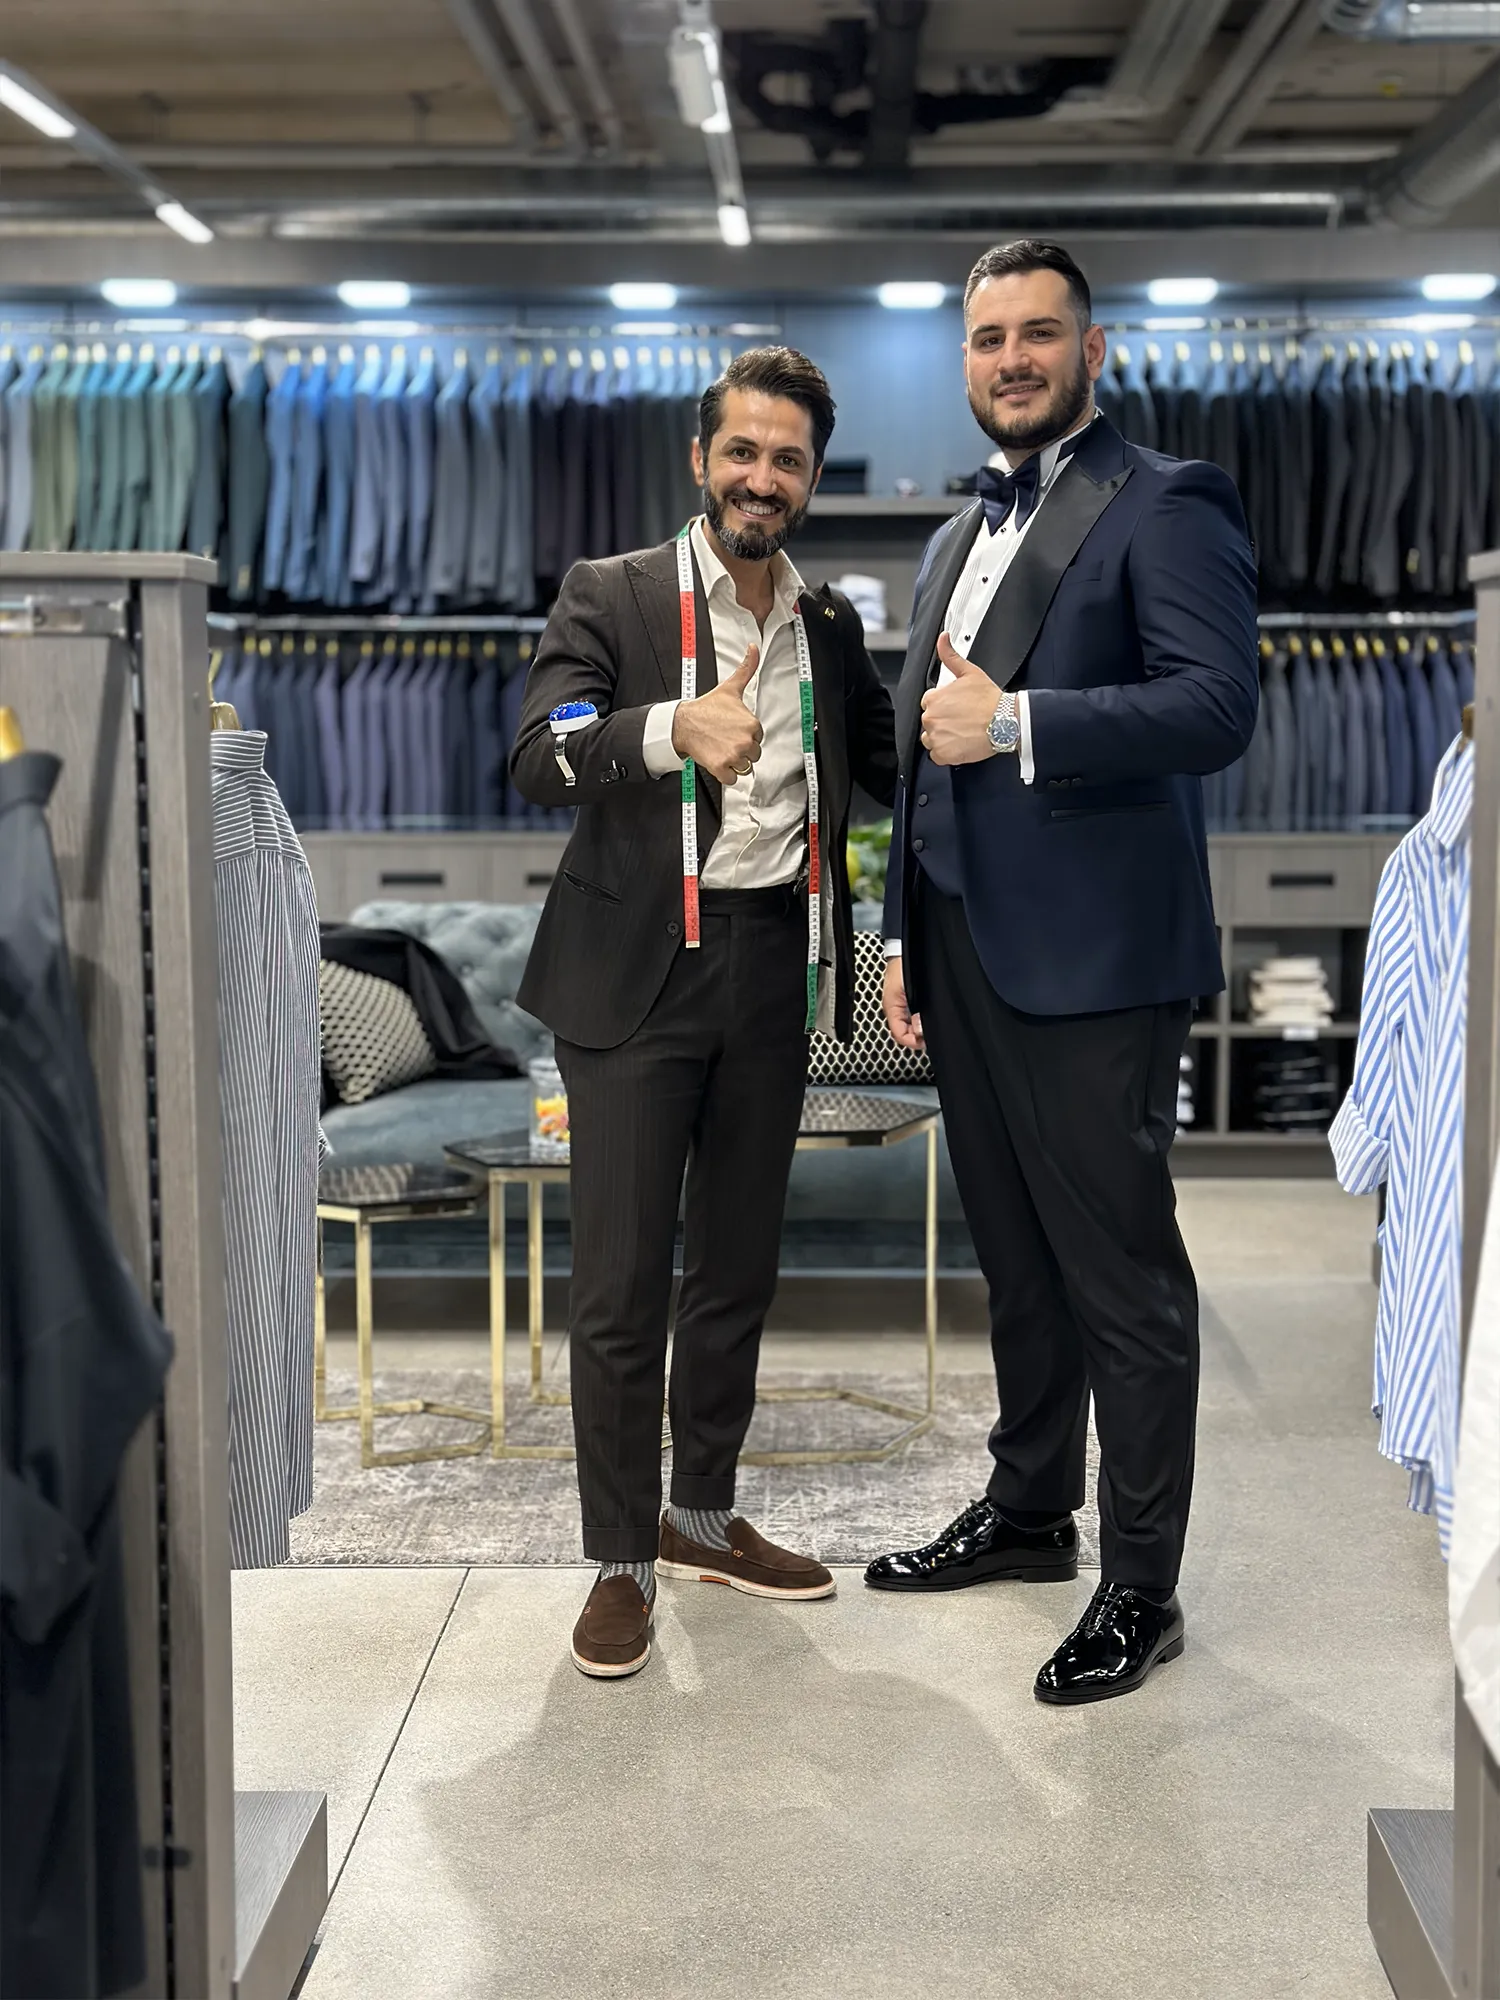 Fendo - Exclusive suits for men